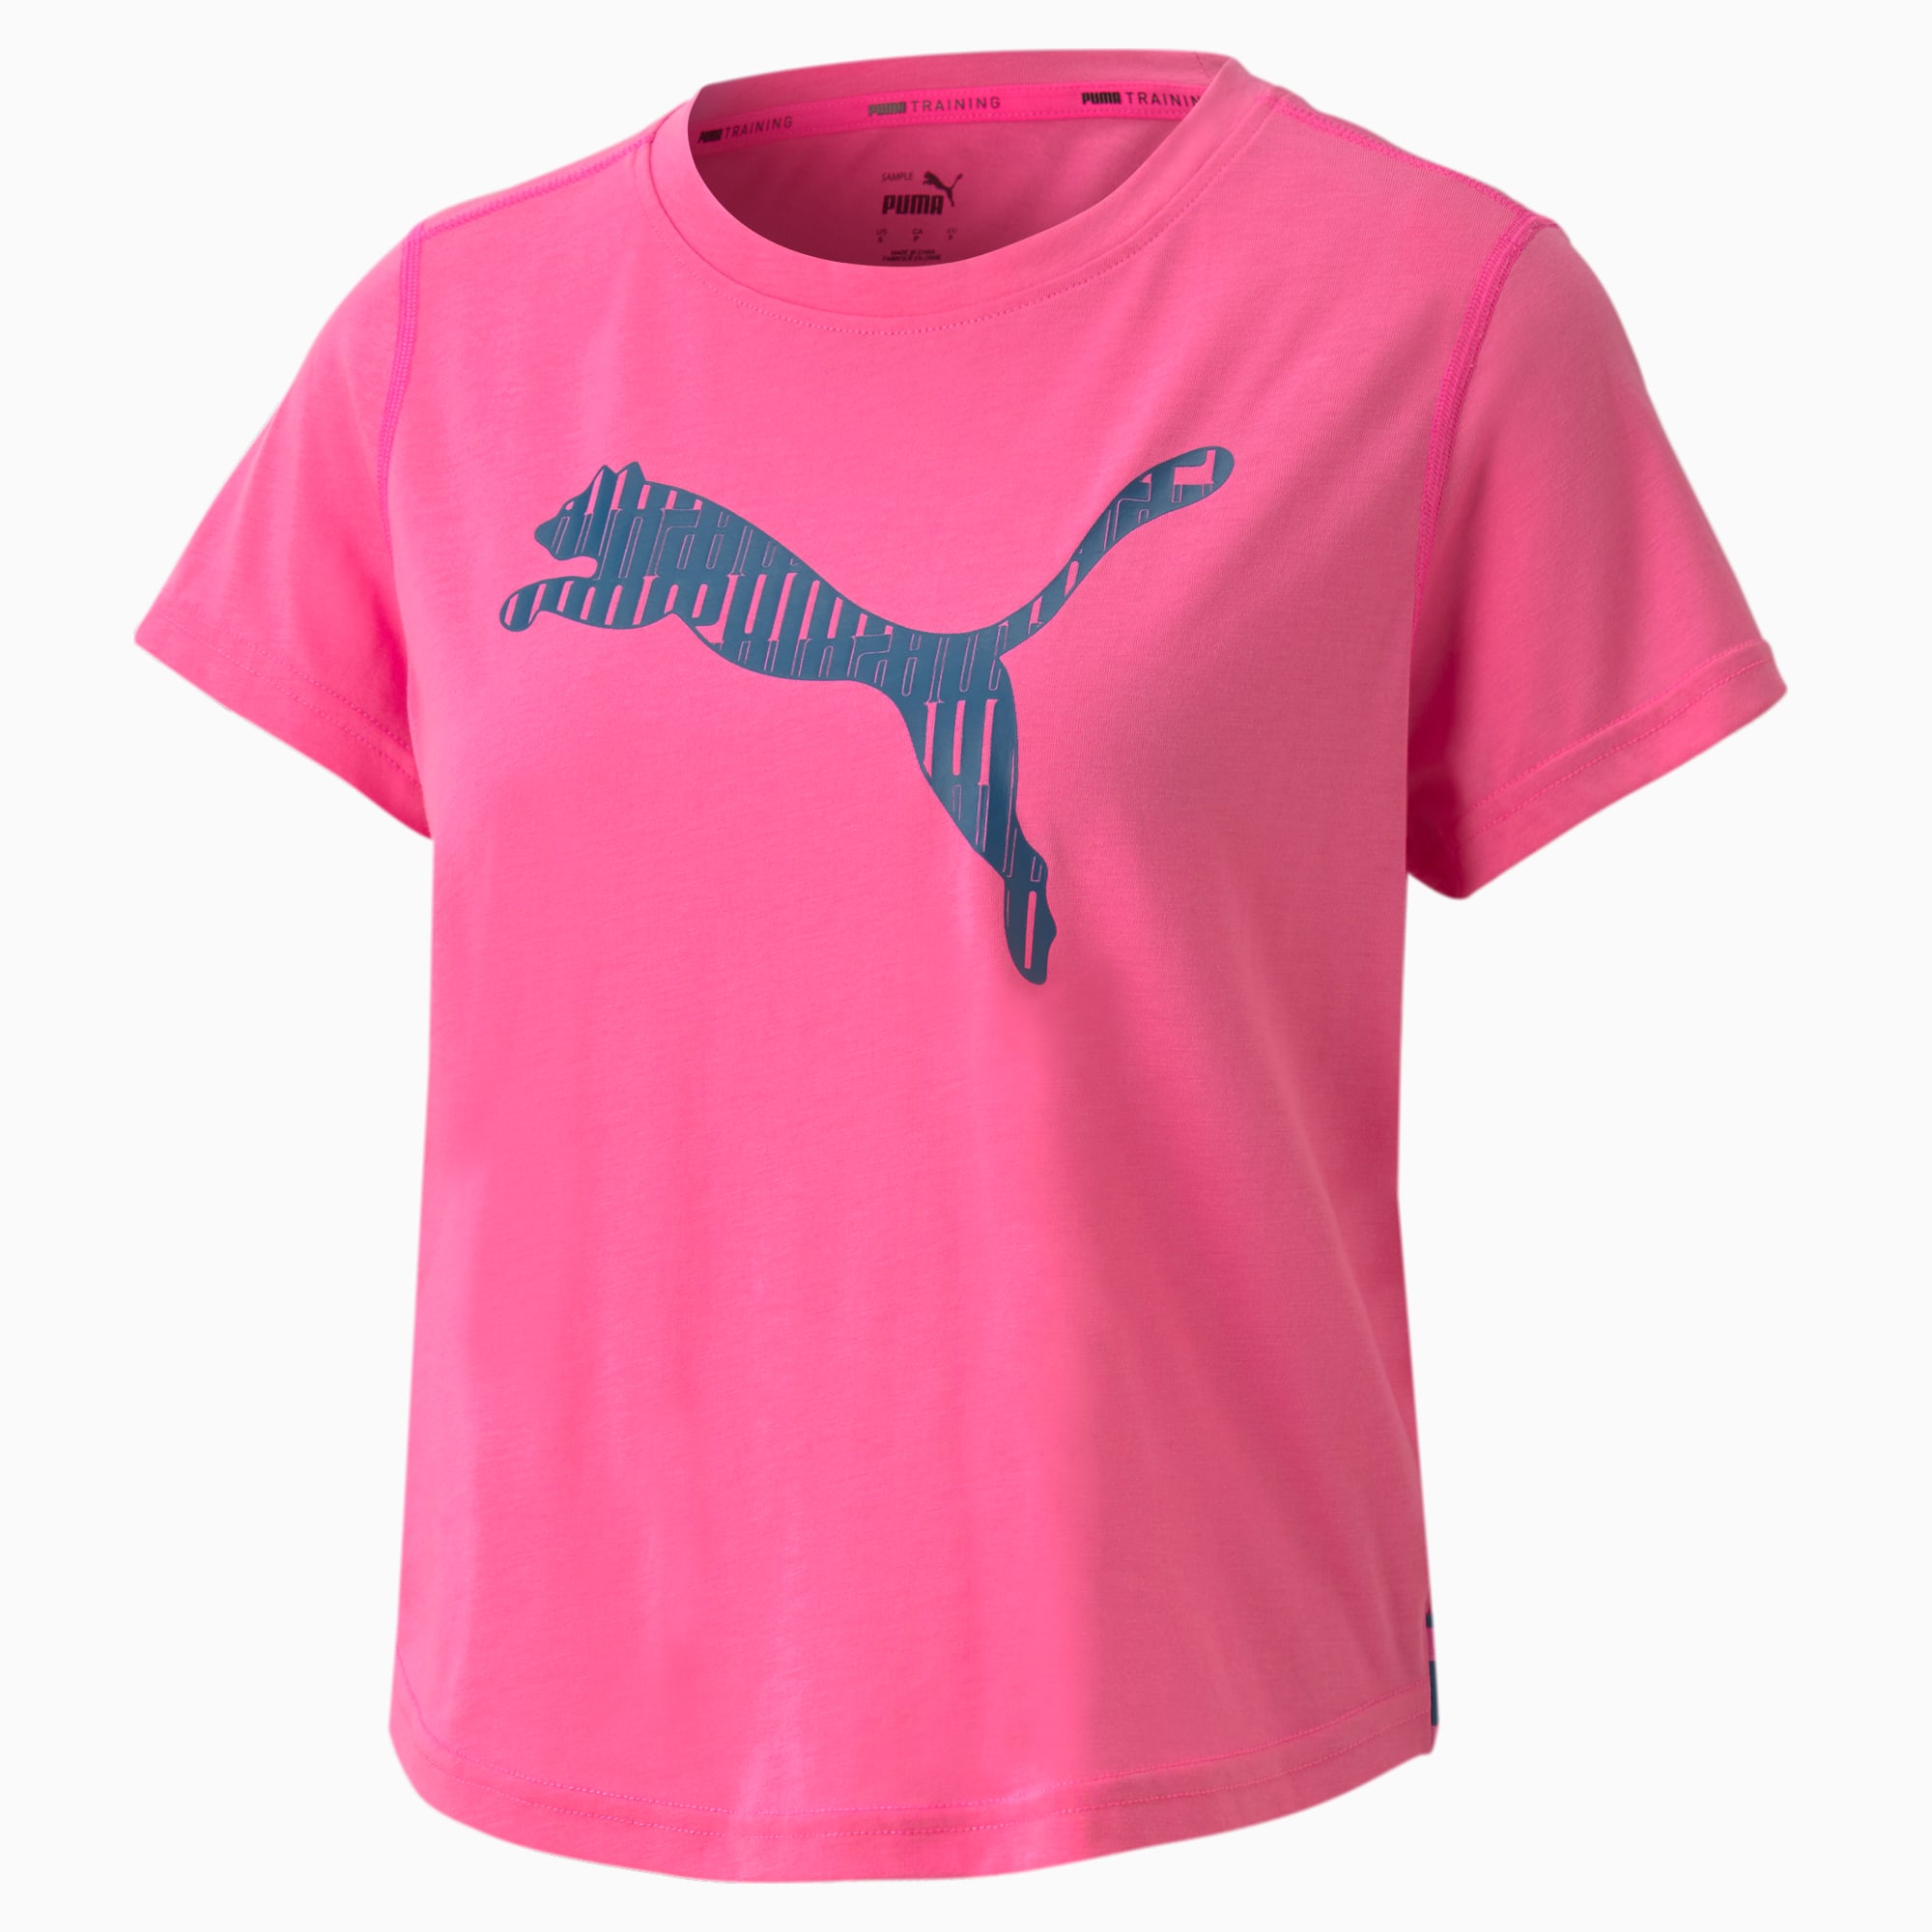 pink puma shirt womens